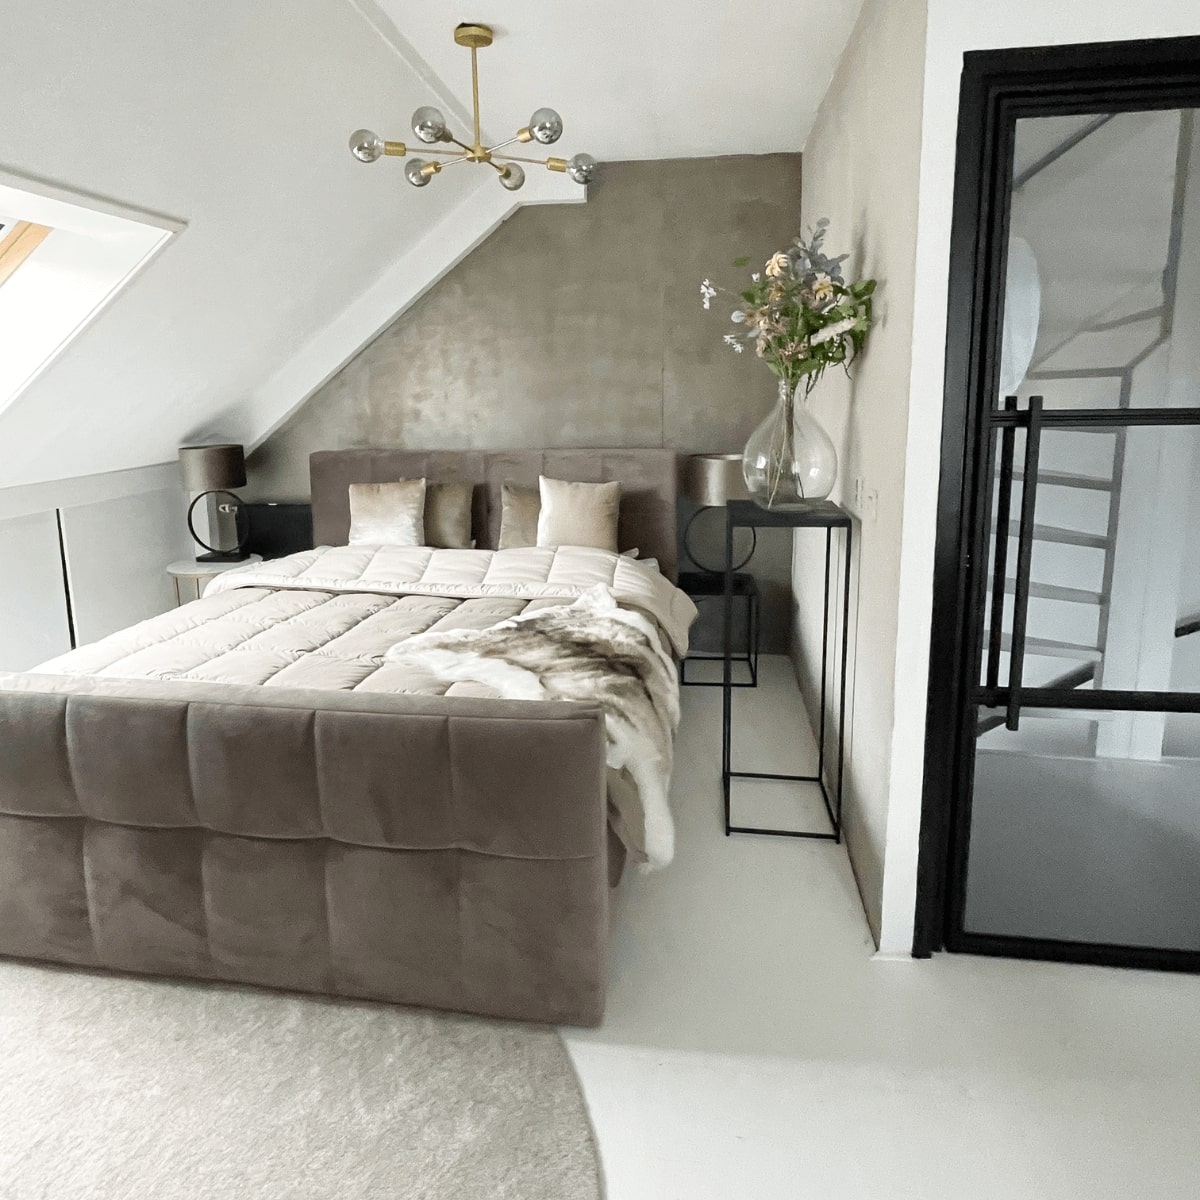 Zelesta Easybed light luxe bedroom style pinterest quilt